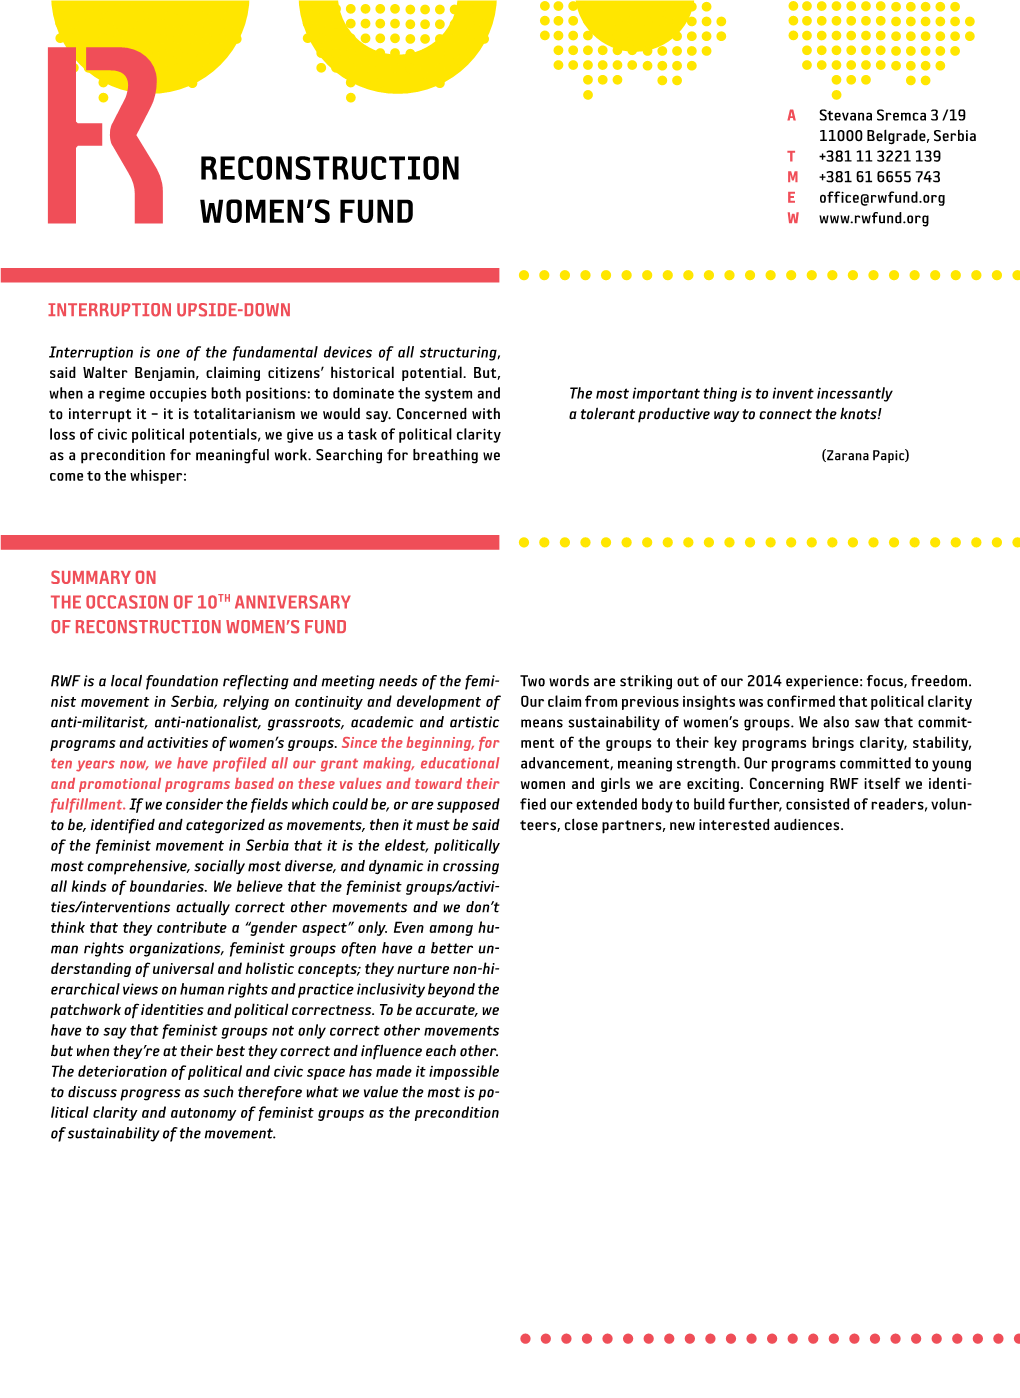 Reconstruction Women's Fund